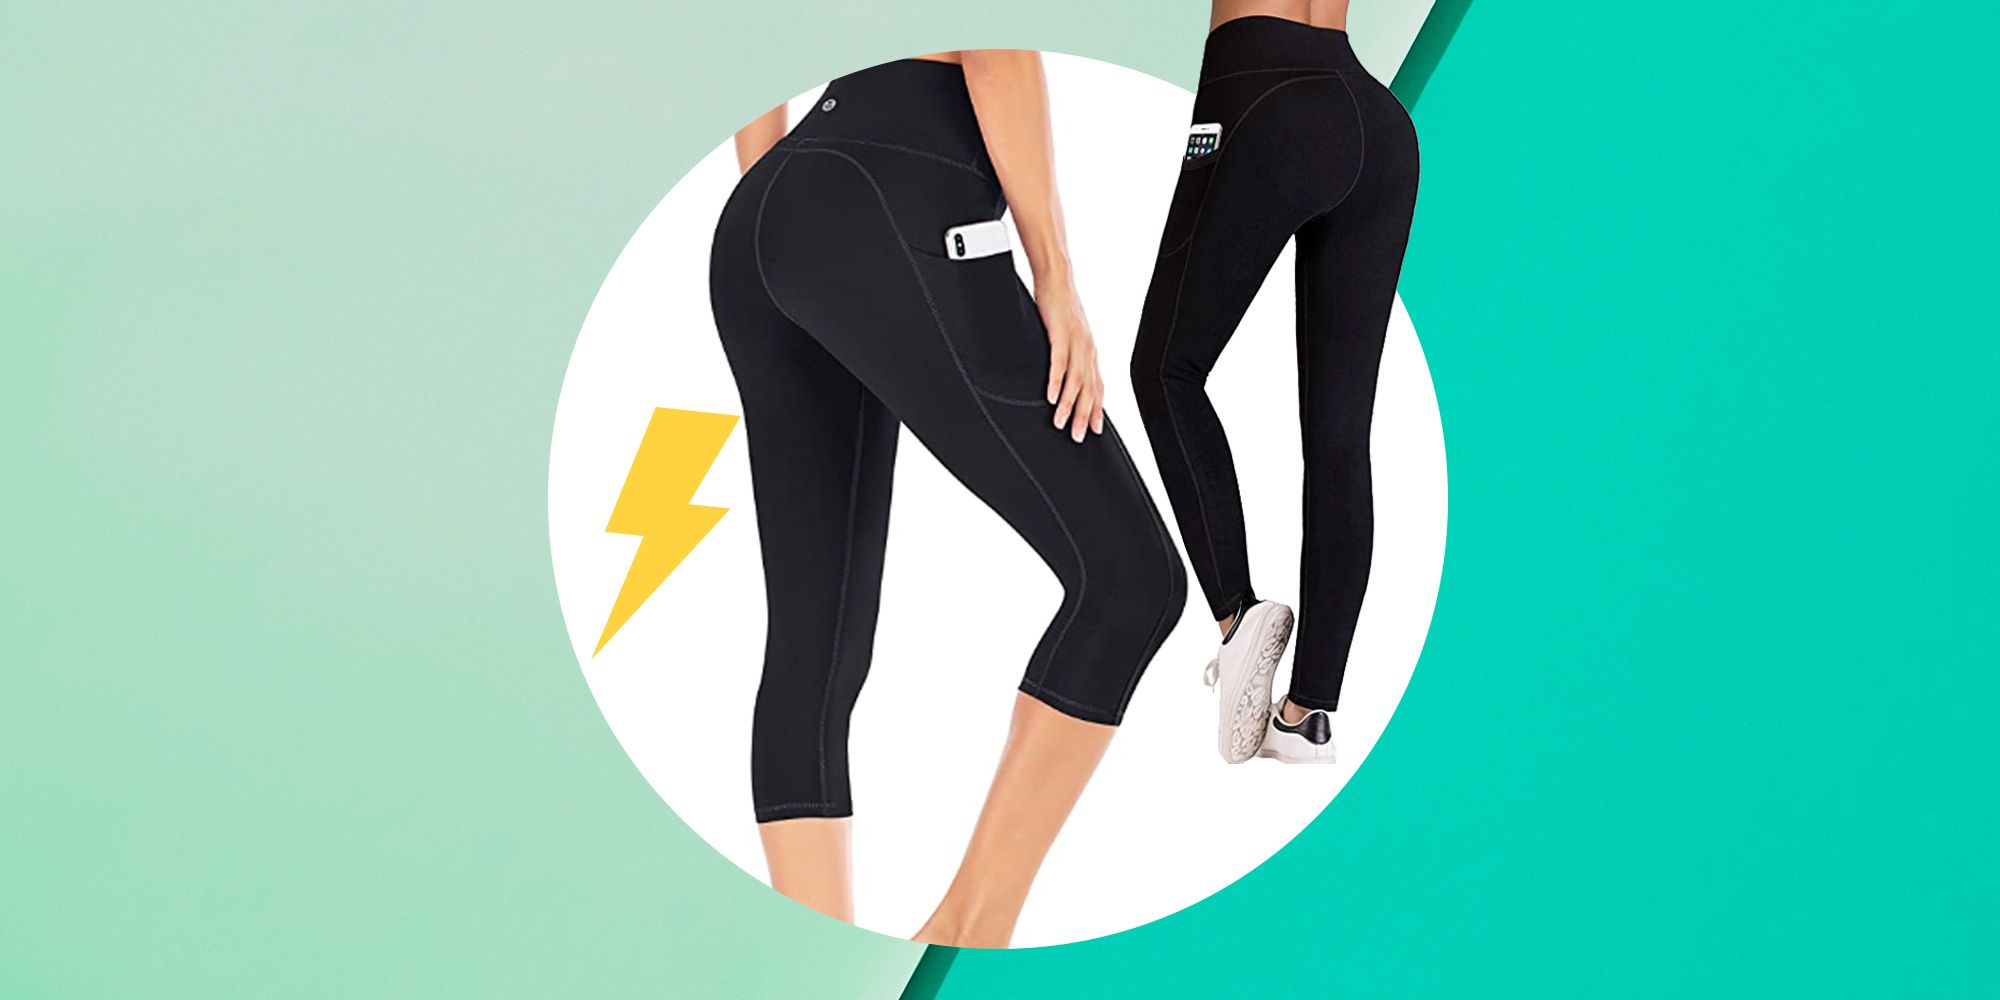 Buy Oalka Women's Yoga Short Side Pockets High Waist Workout Running Shorts  Black XS at Amazon.in